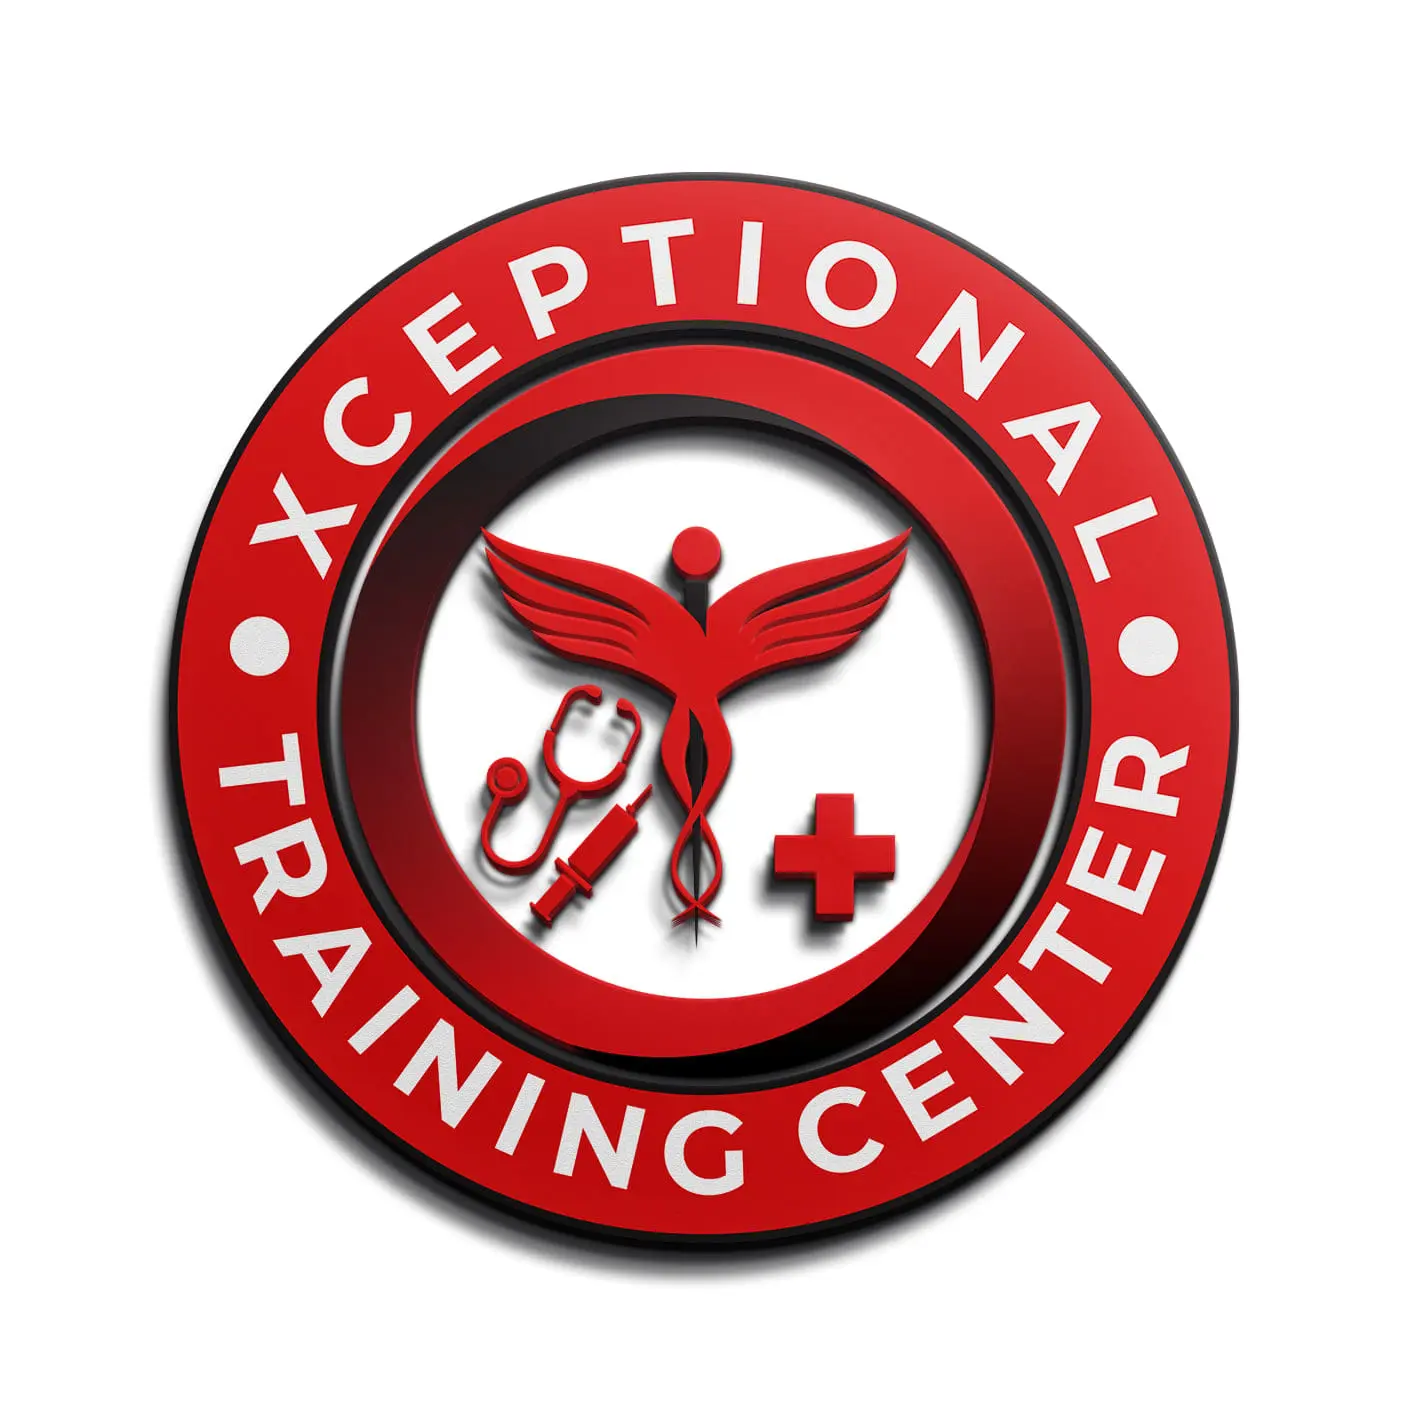 xceptional training center